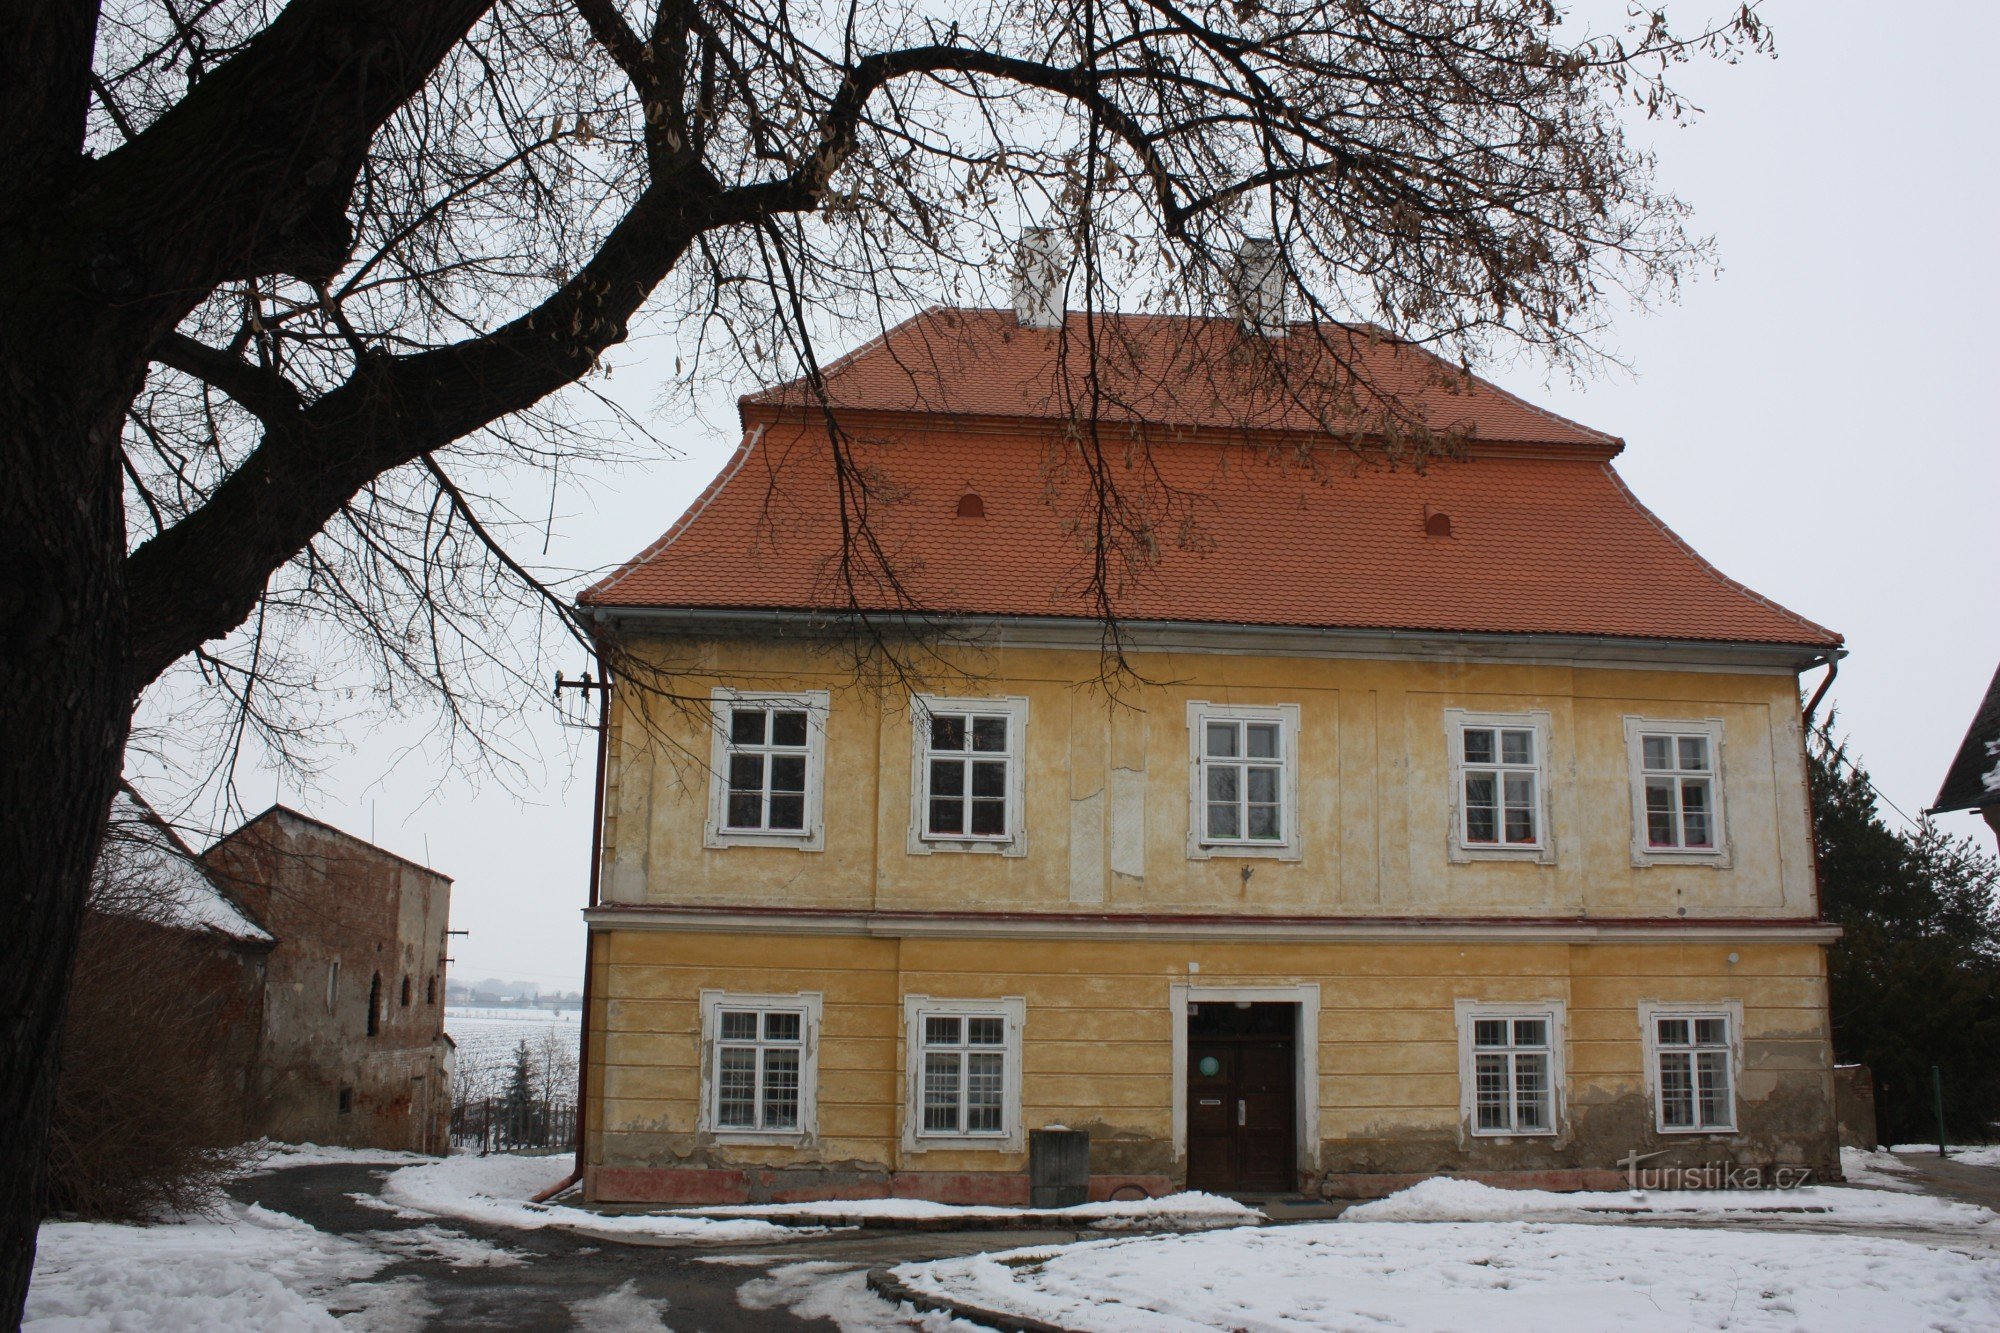 Baroque parsonage with a mansard roof in Nezamyslice